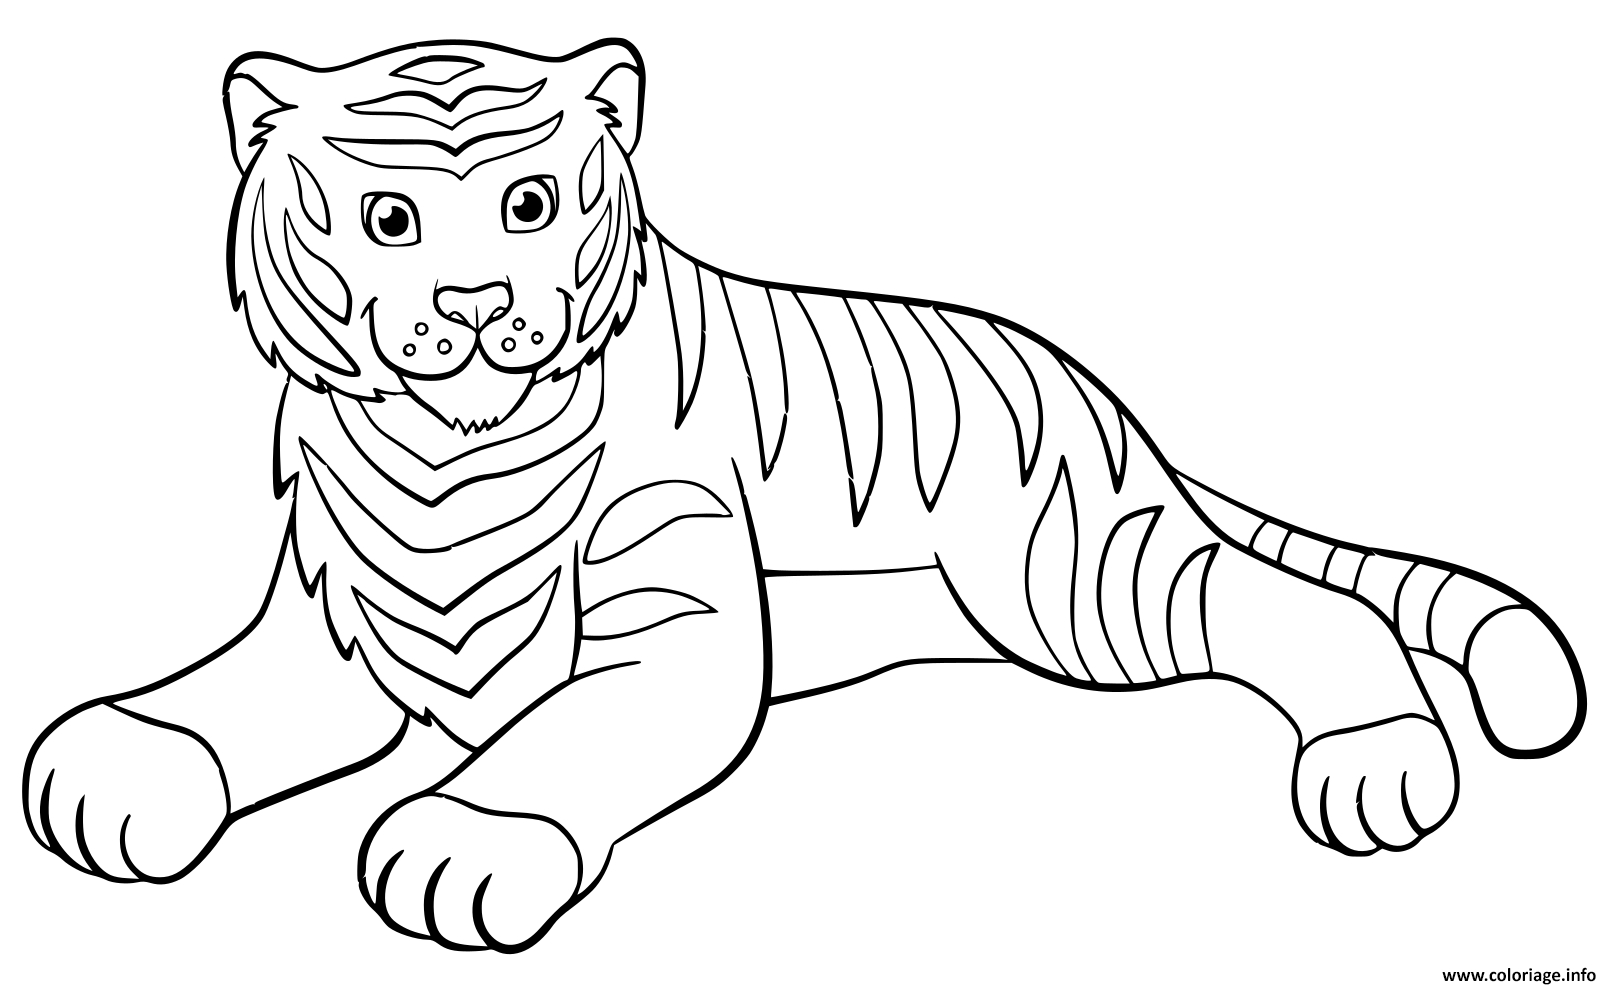 Coloriage Adorable Tigre Qui Se Repose Dessin Animaux De La Jungle À avec Coloriage Felin A Imprimer 